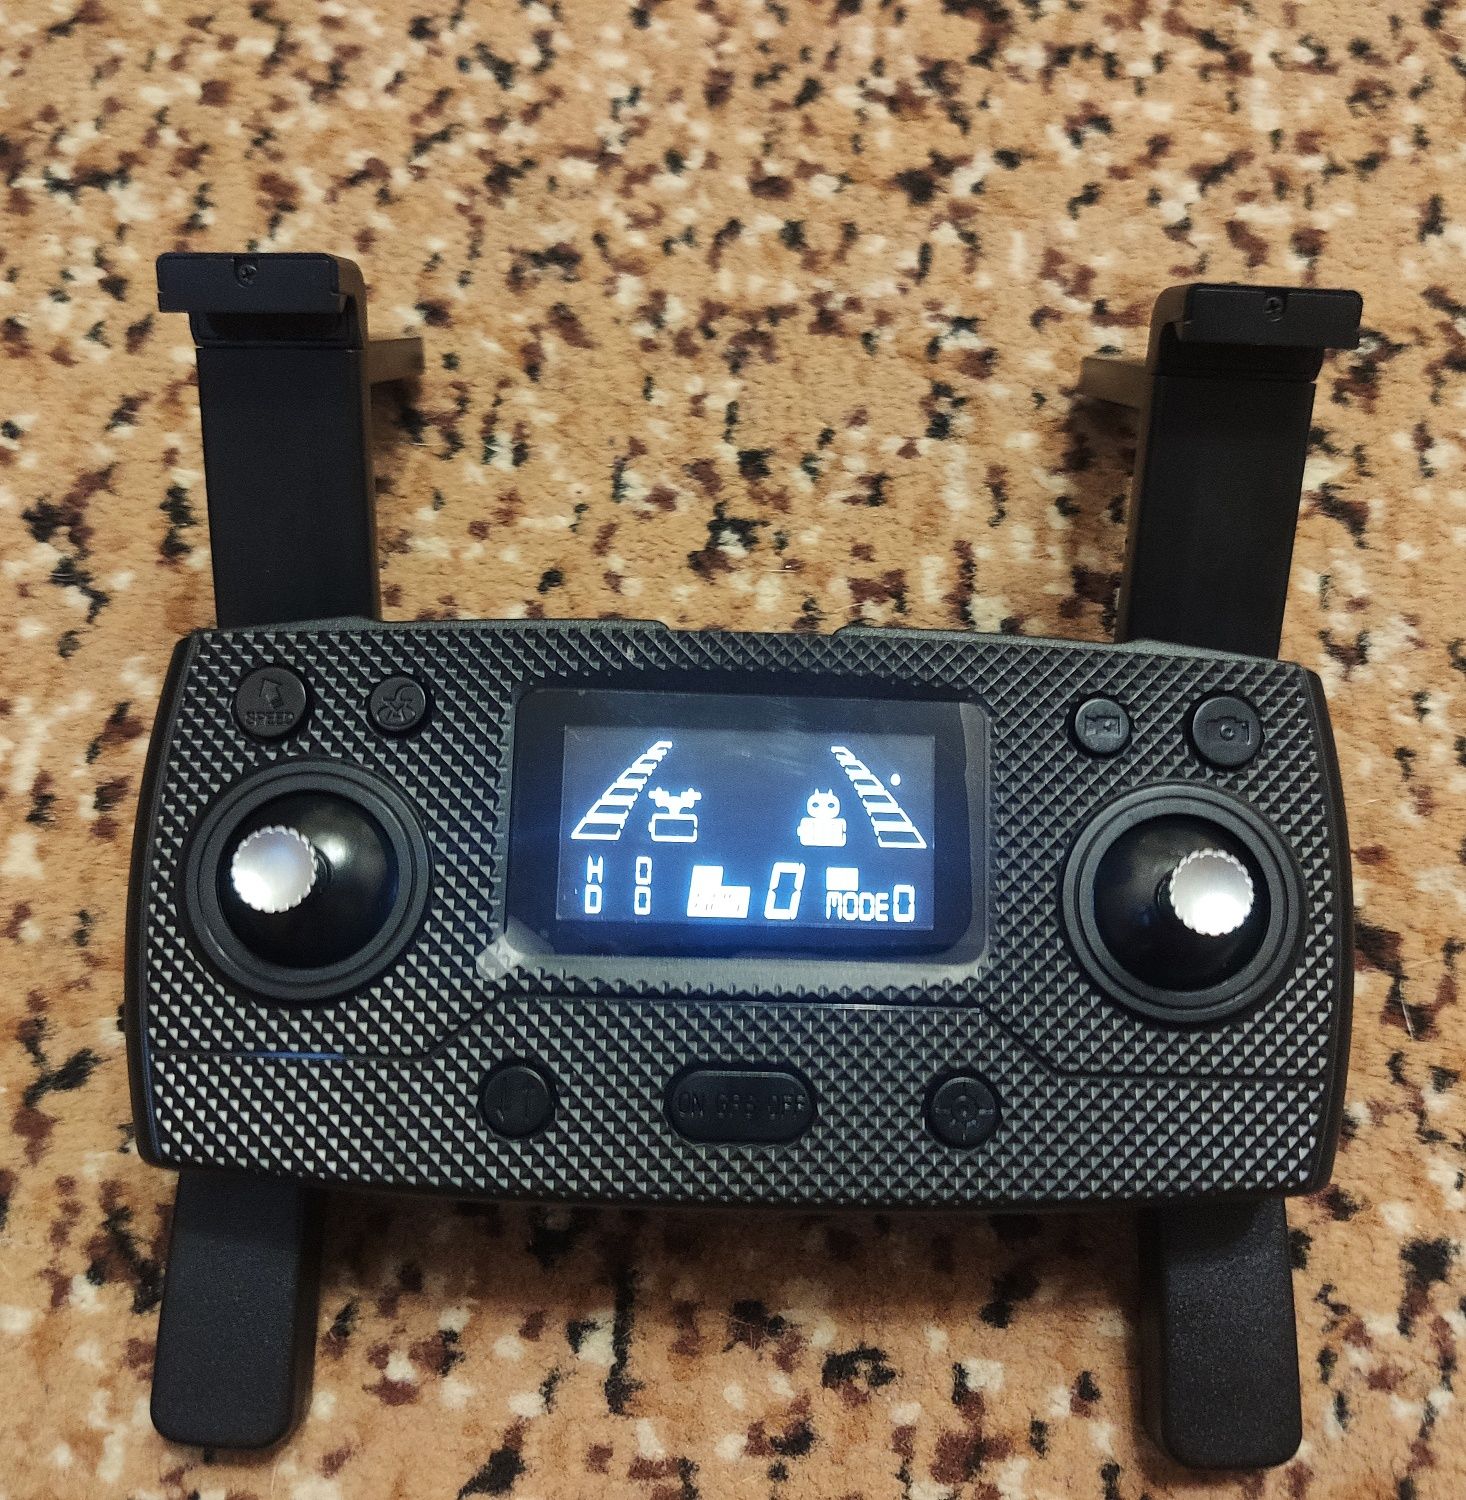 SG907 Pro 5G WI-FI GPS Дрон с разрешением 4K Широкий формат.